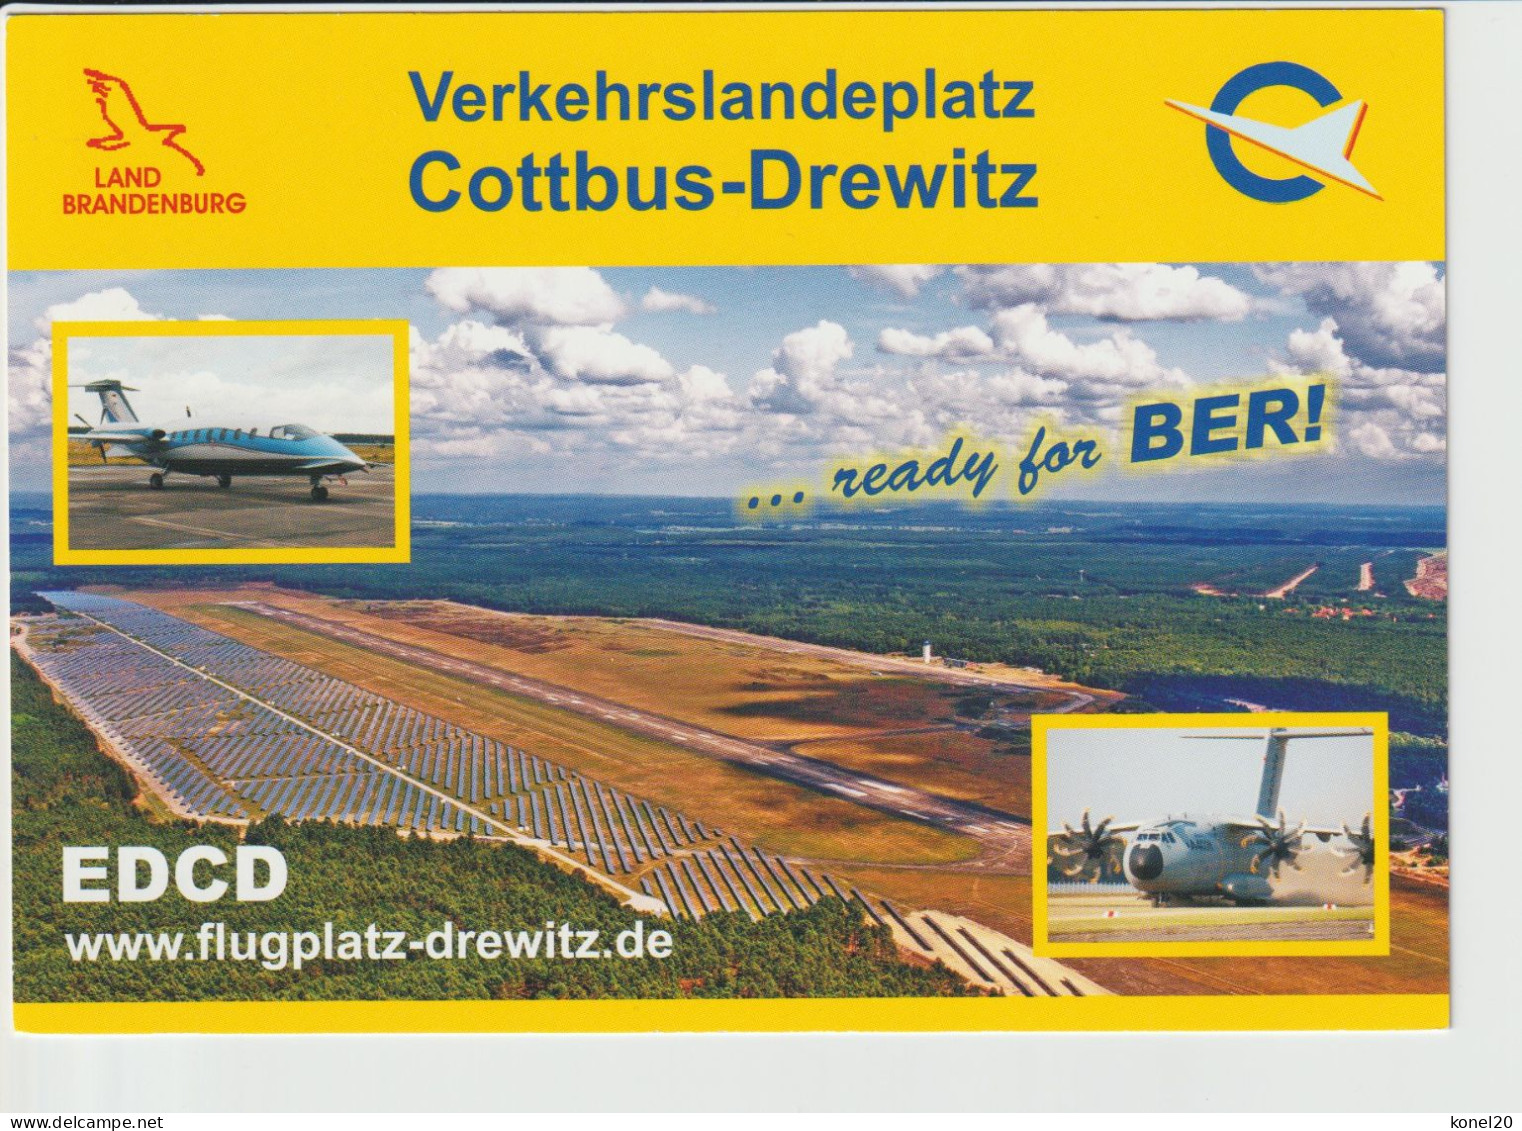 Promotioncard Verkehrlandeplatz Cottbus-Drewitz - 1919-1938: Between Wars